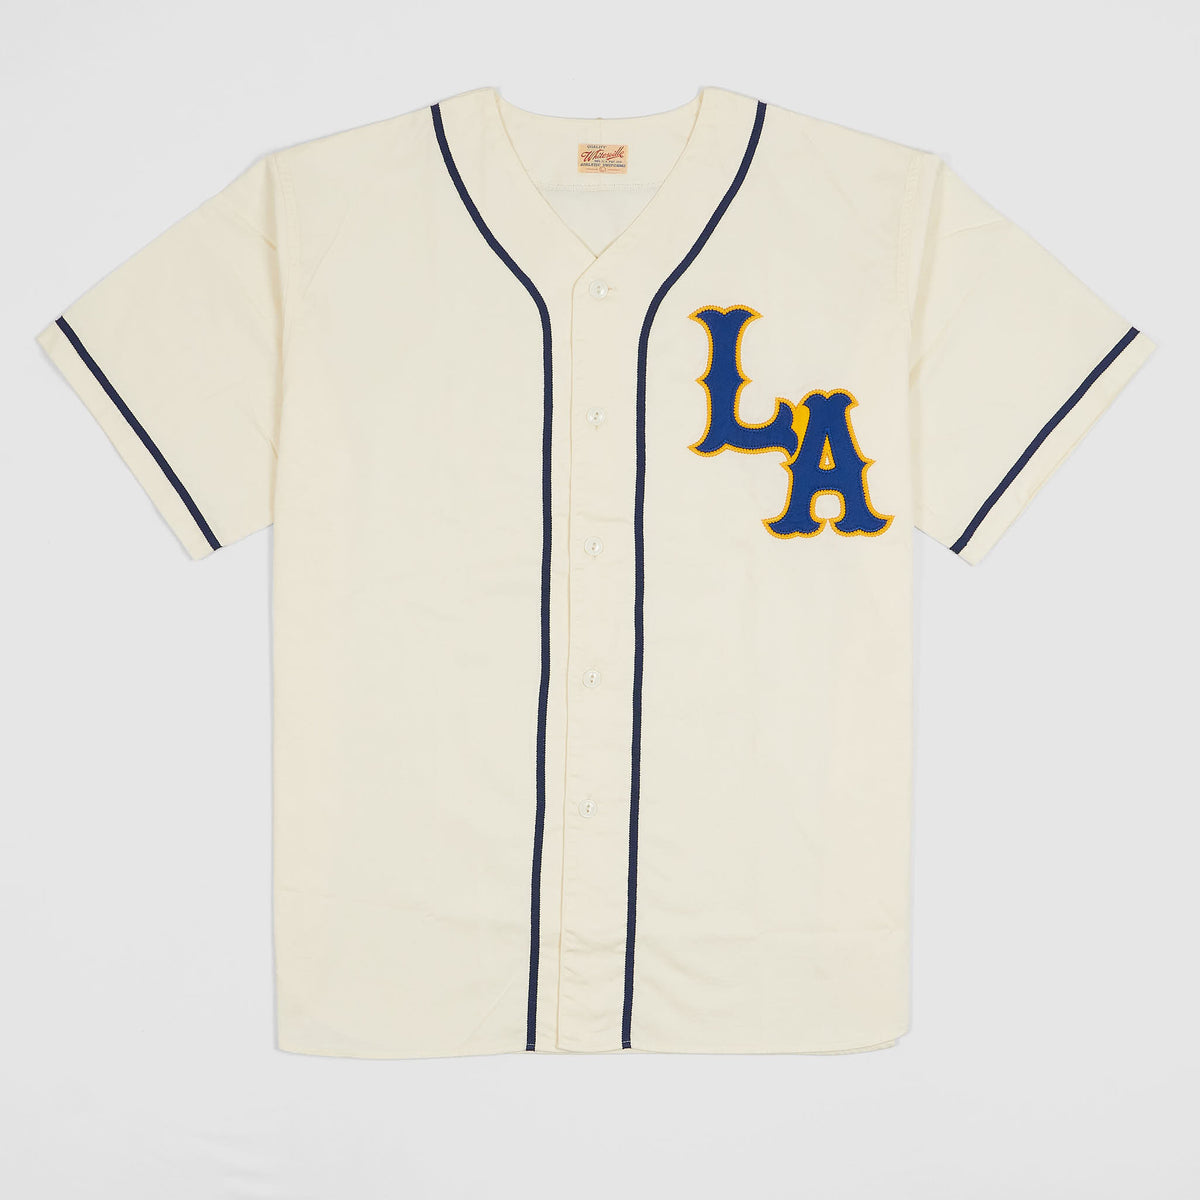 Whitesville LA Baseball Shirt